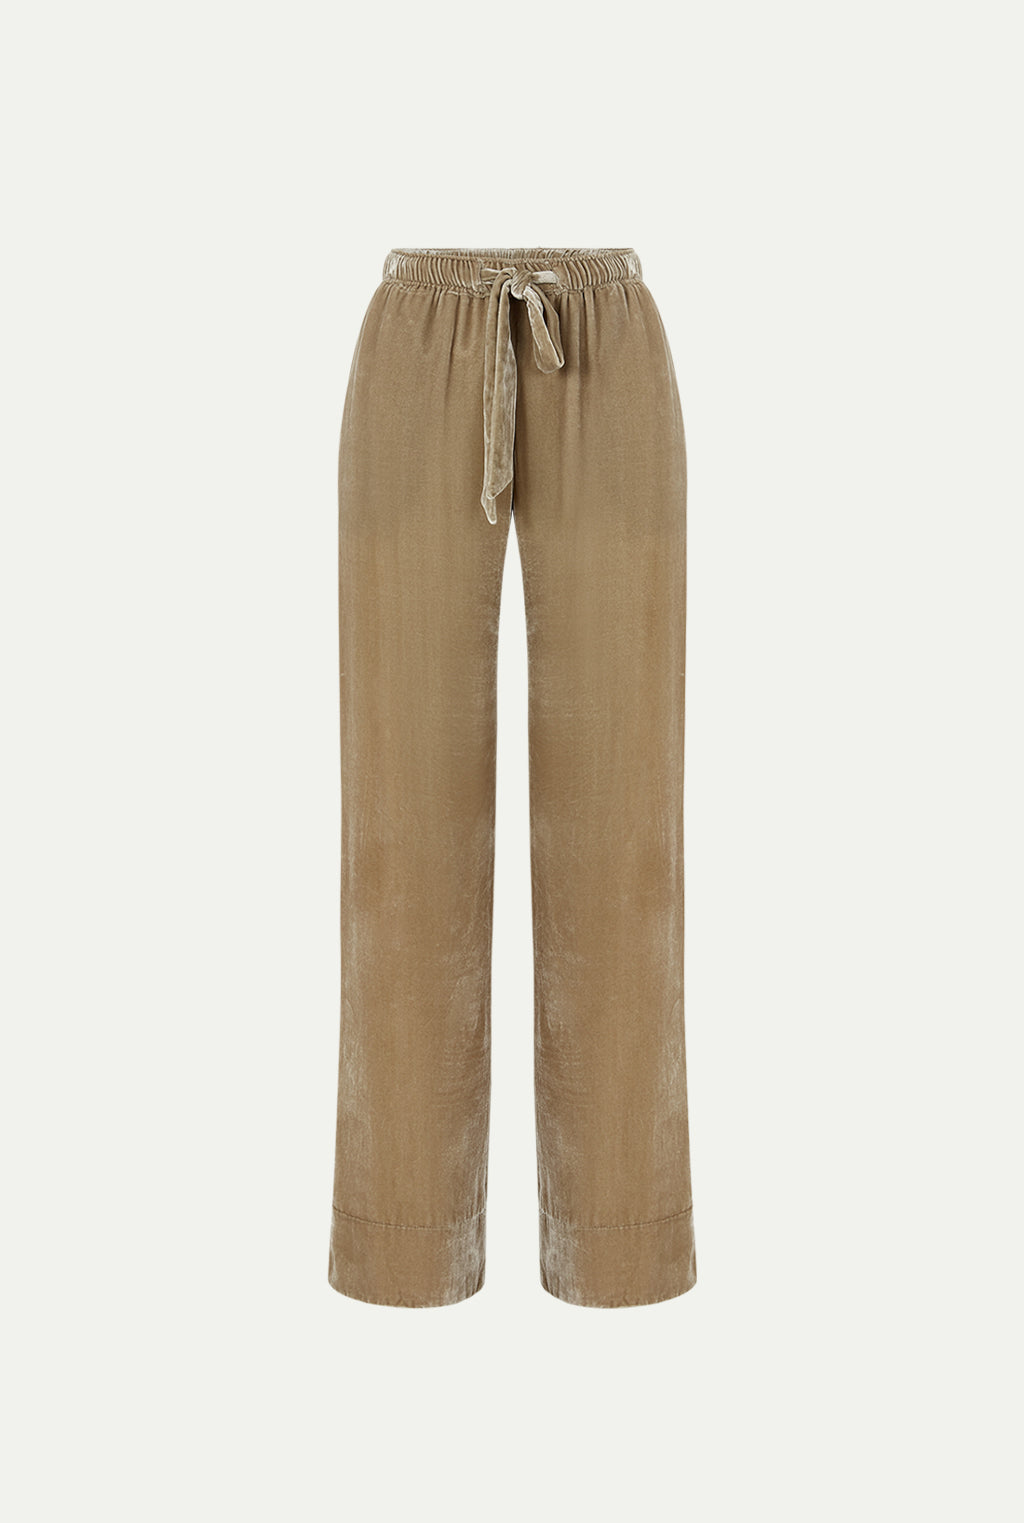 CAMUSFA velvet pants